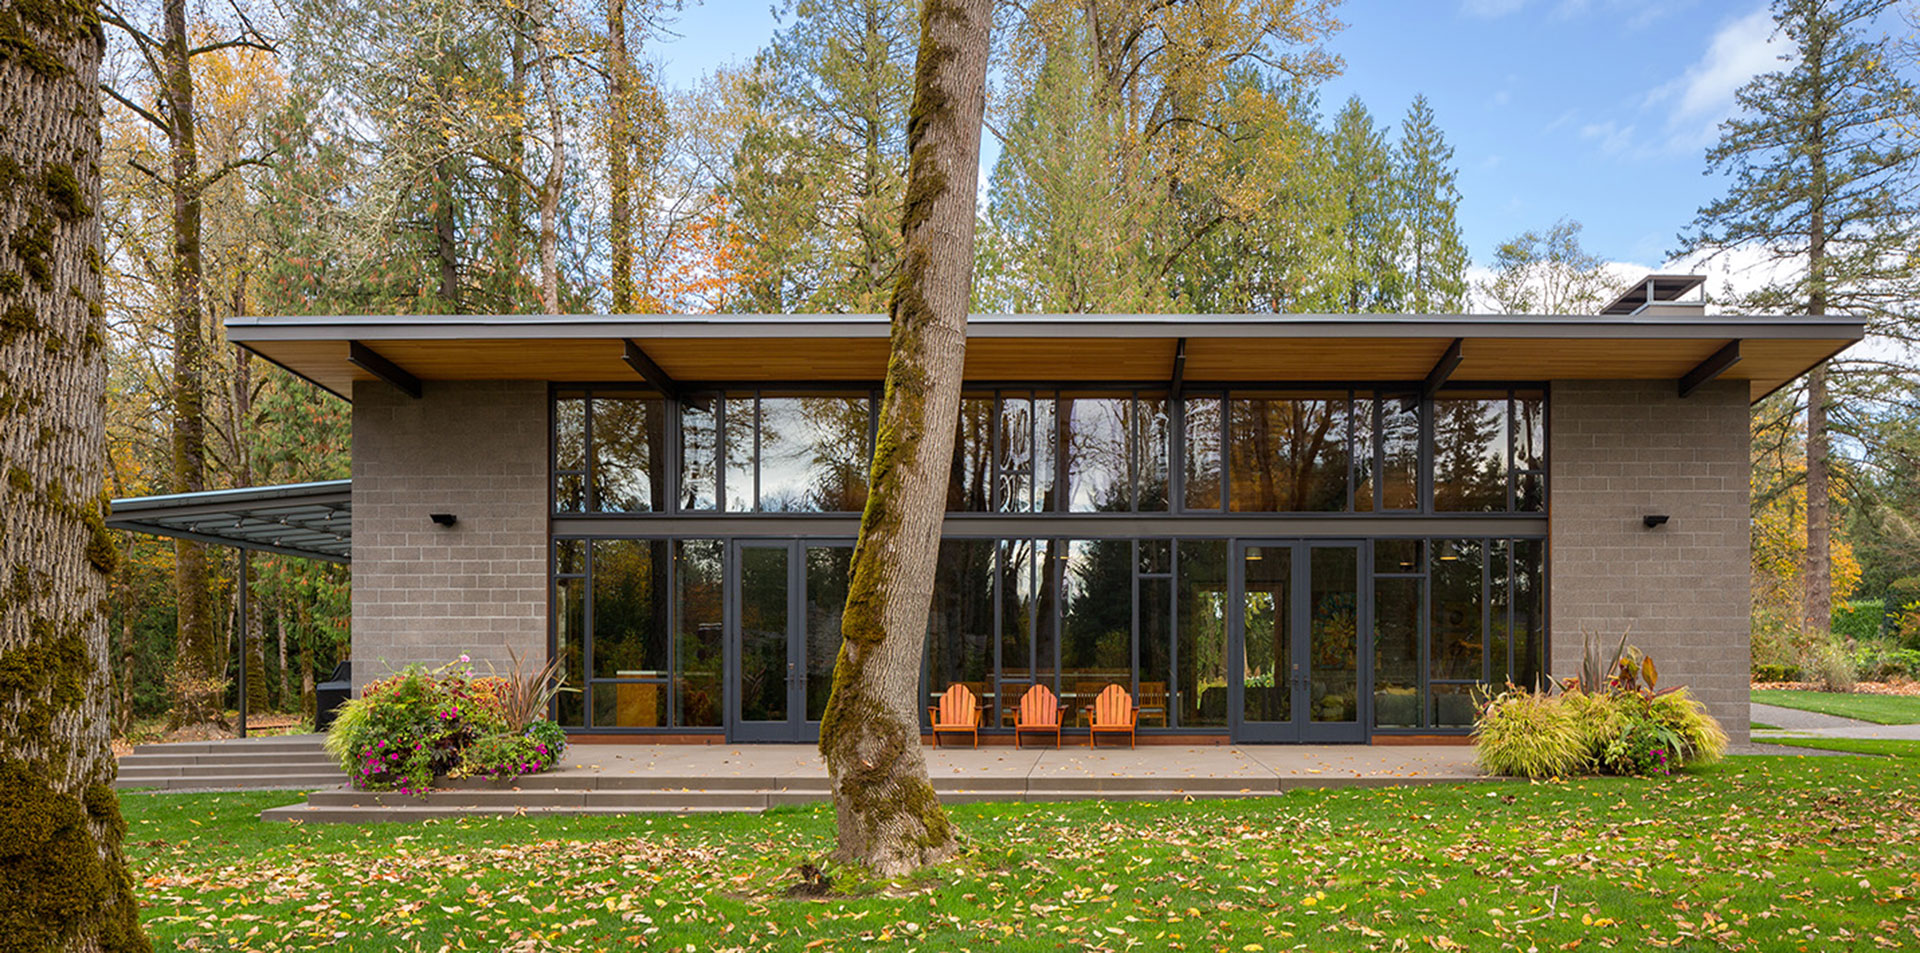 Wilsonville Garden Studio - Ellen Fortin Design + Architecture